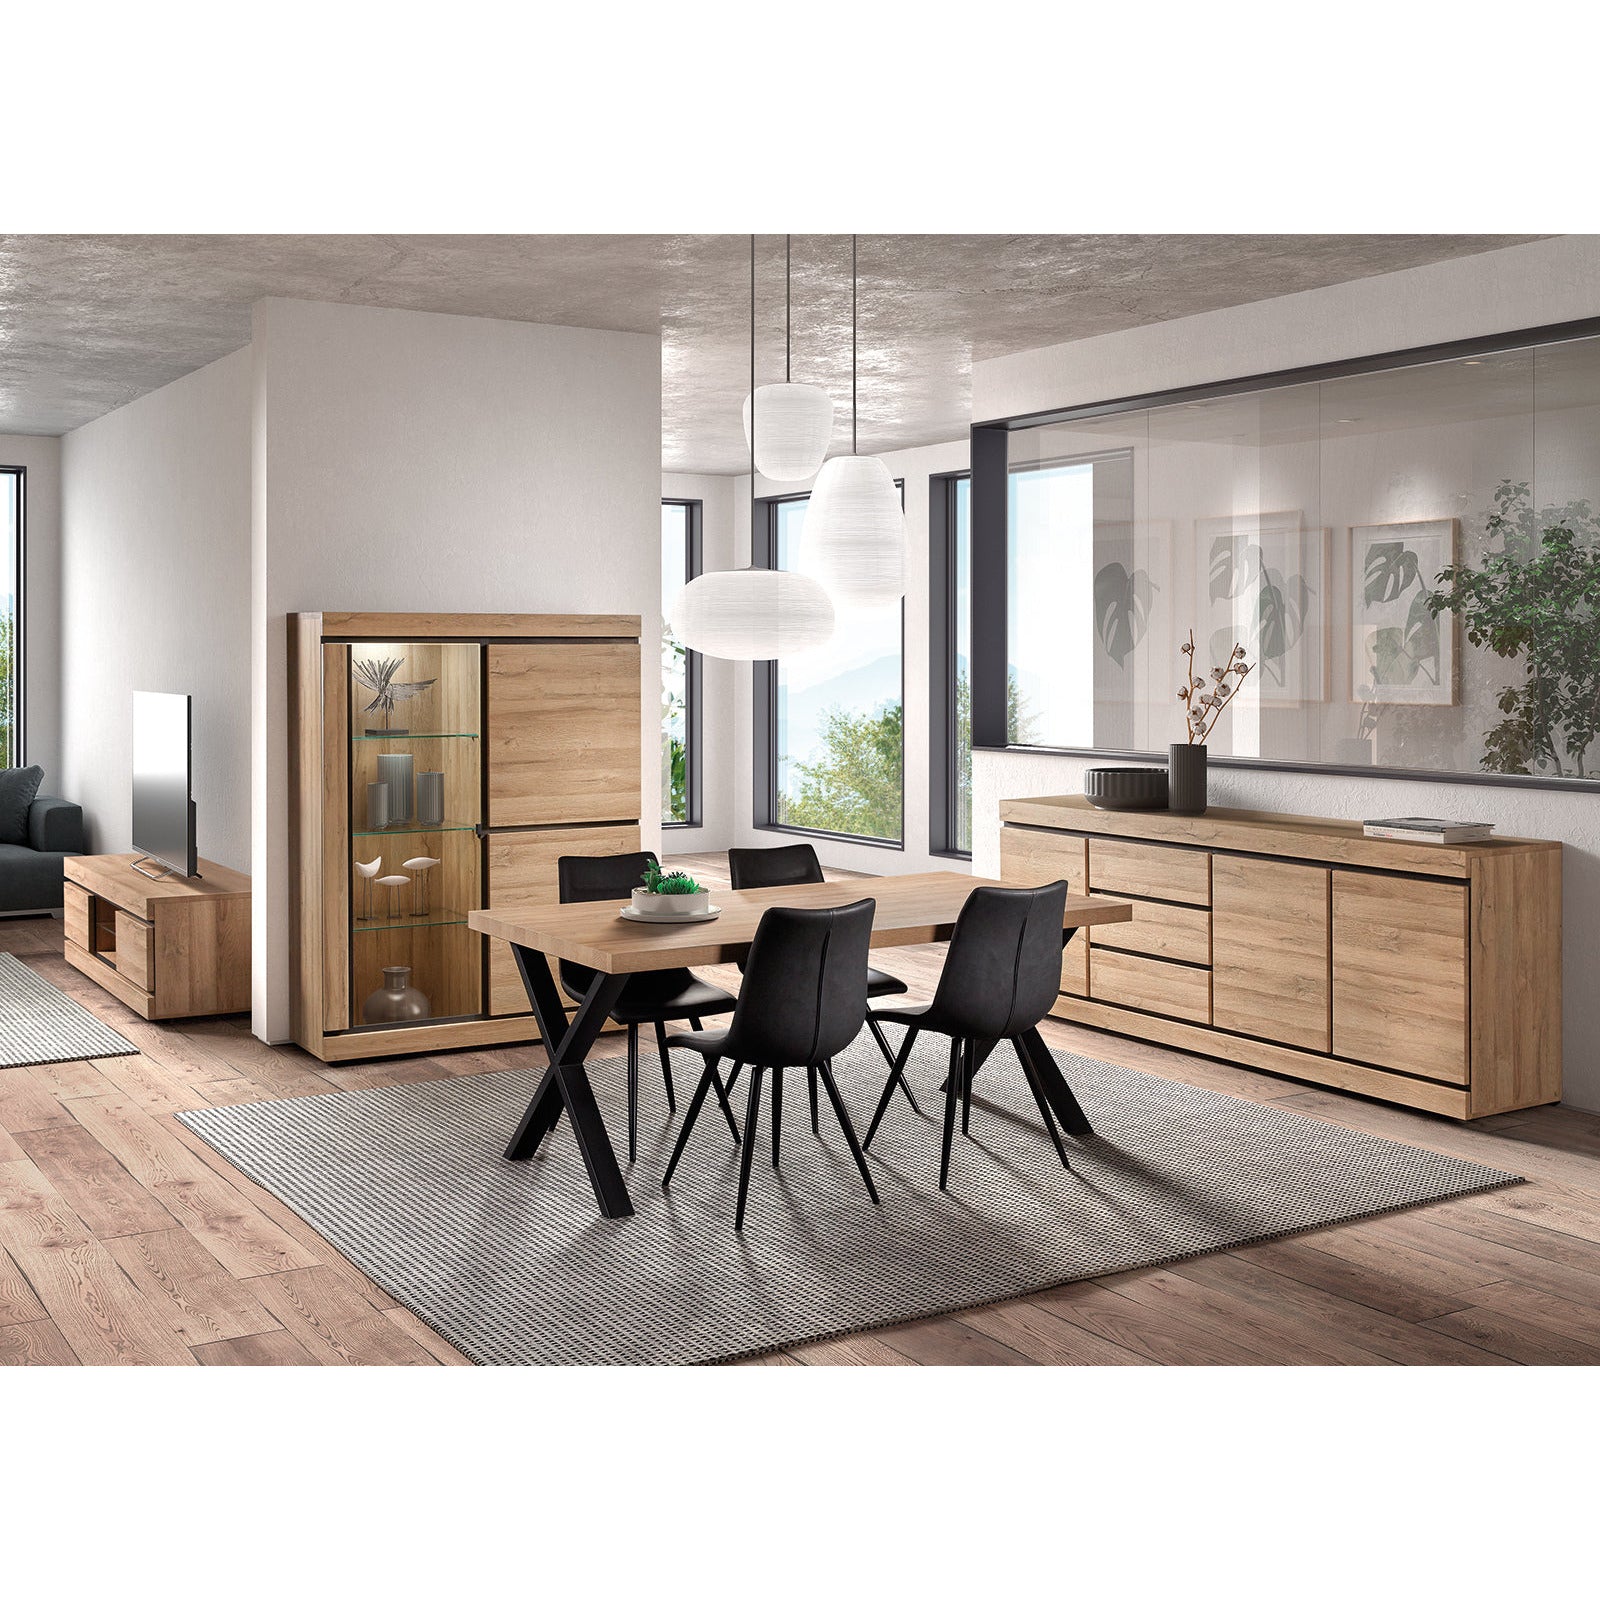 Wall cabinet | Furniture series Talenso | natural, gray, brown | 130